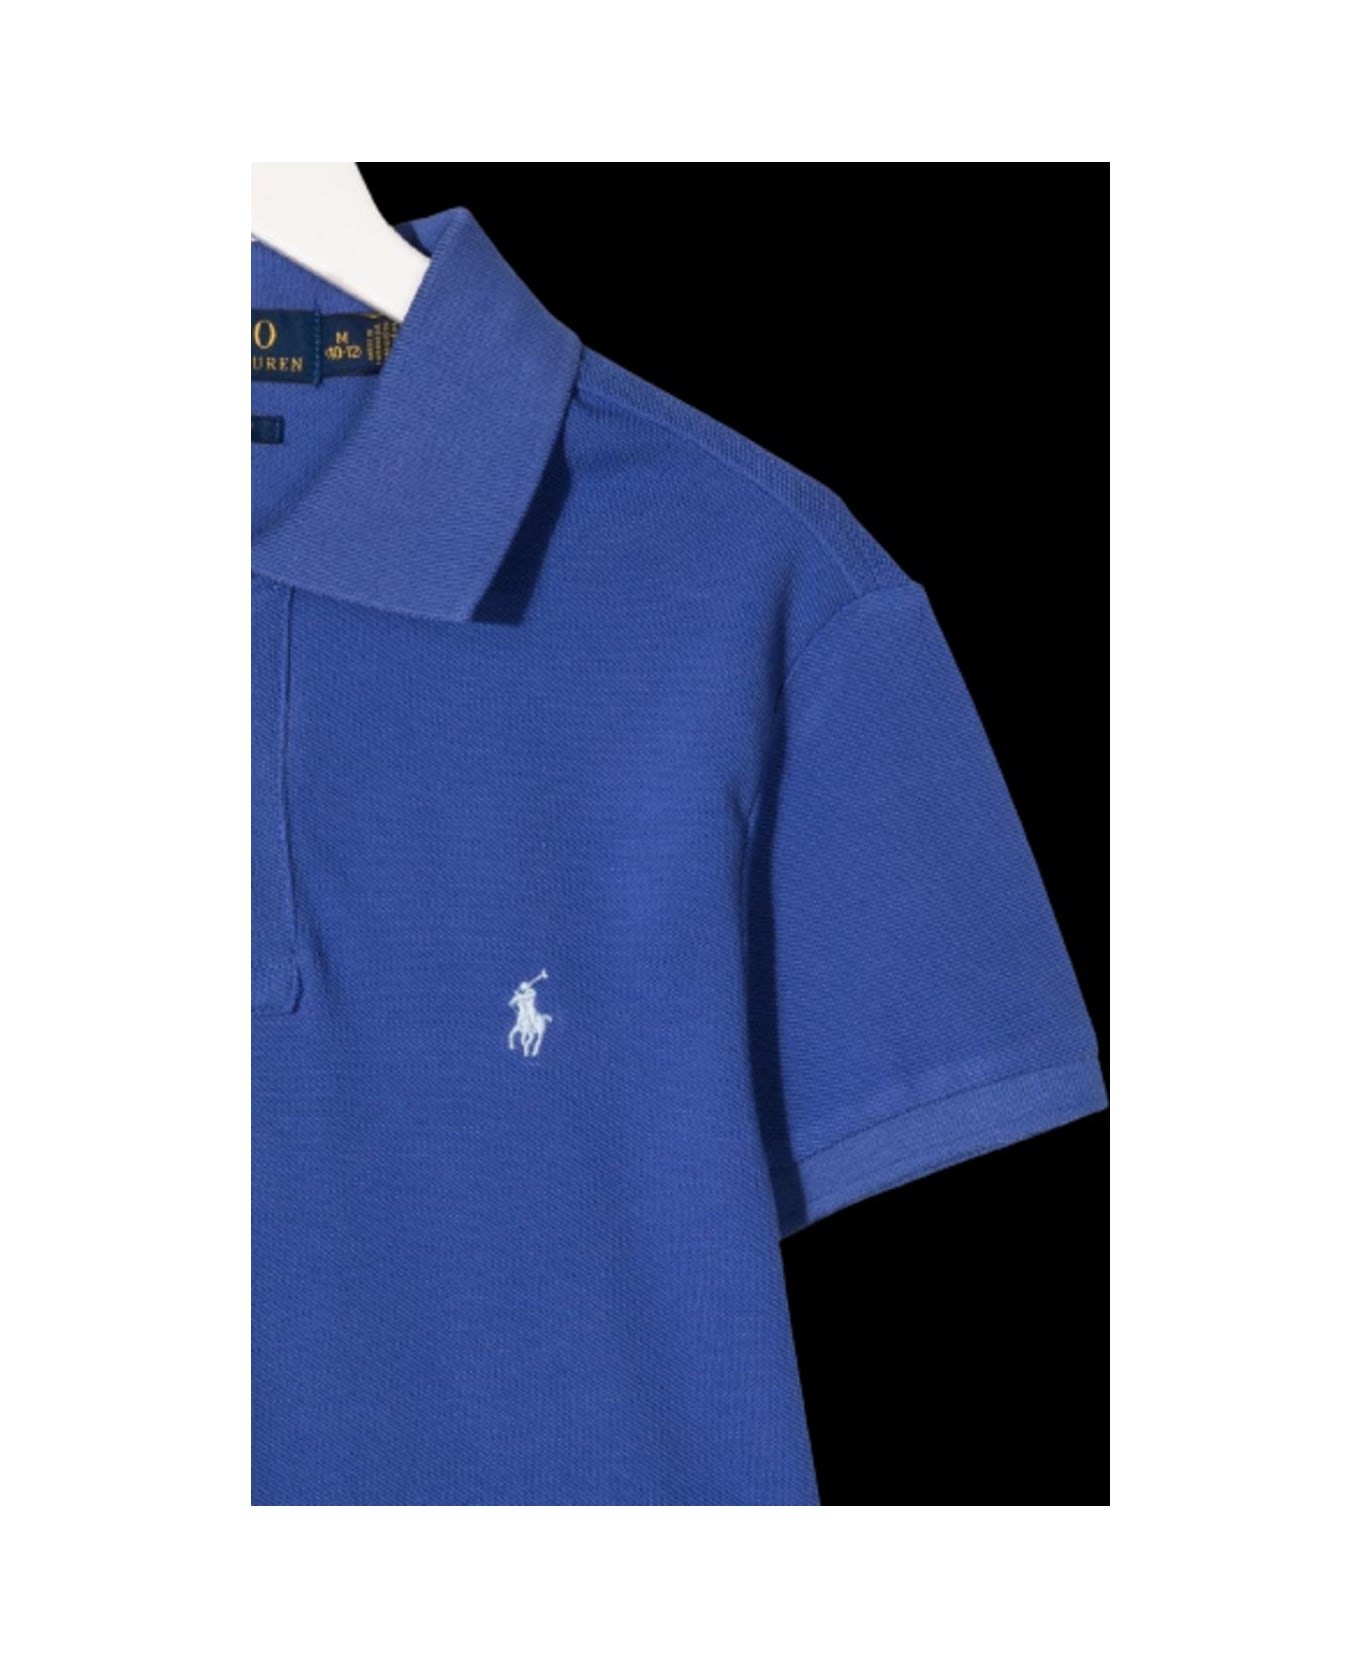 Polo Ralph Lauren Kids Boy's Blue Cotton Piquet Polo Shirt With Logo - Blu Tシャツ＆ポロシャツ